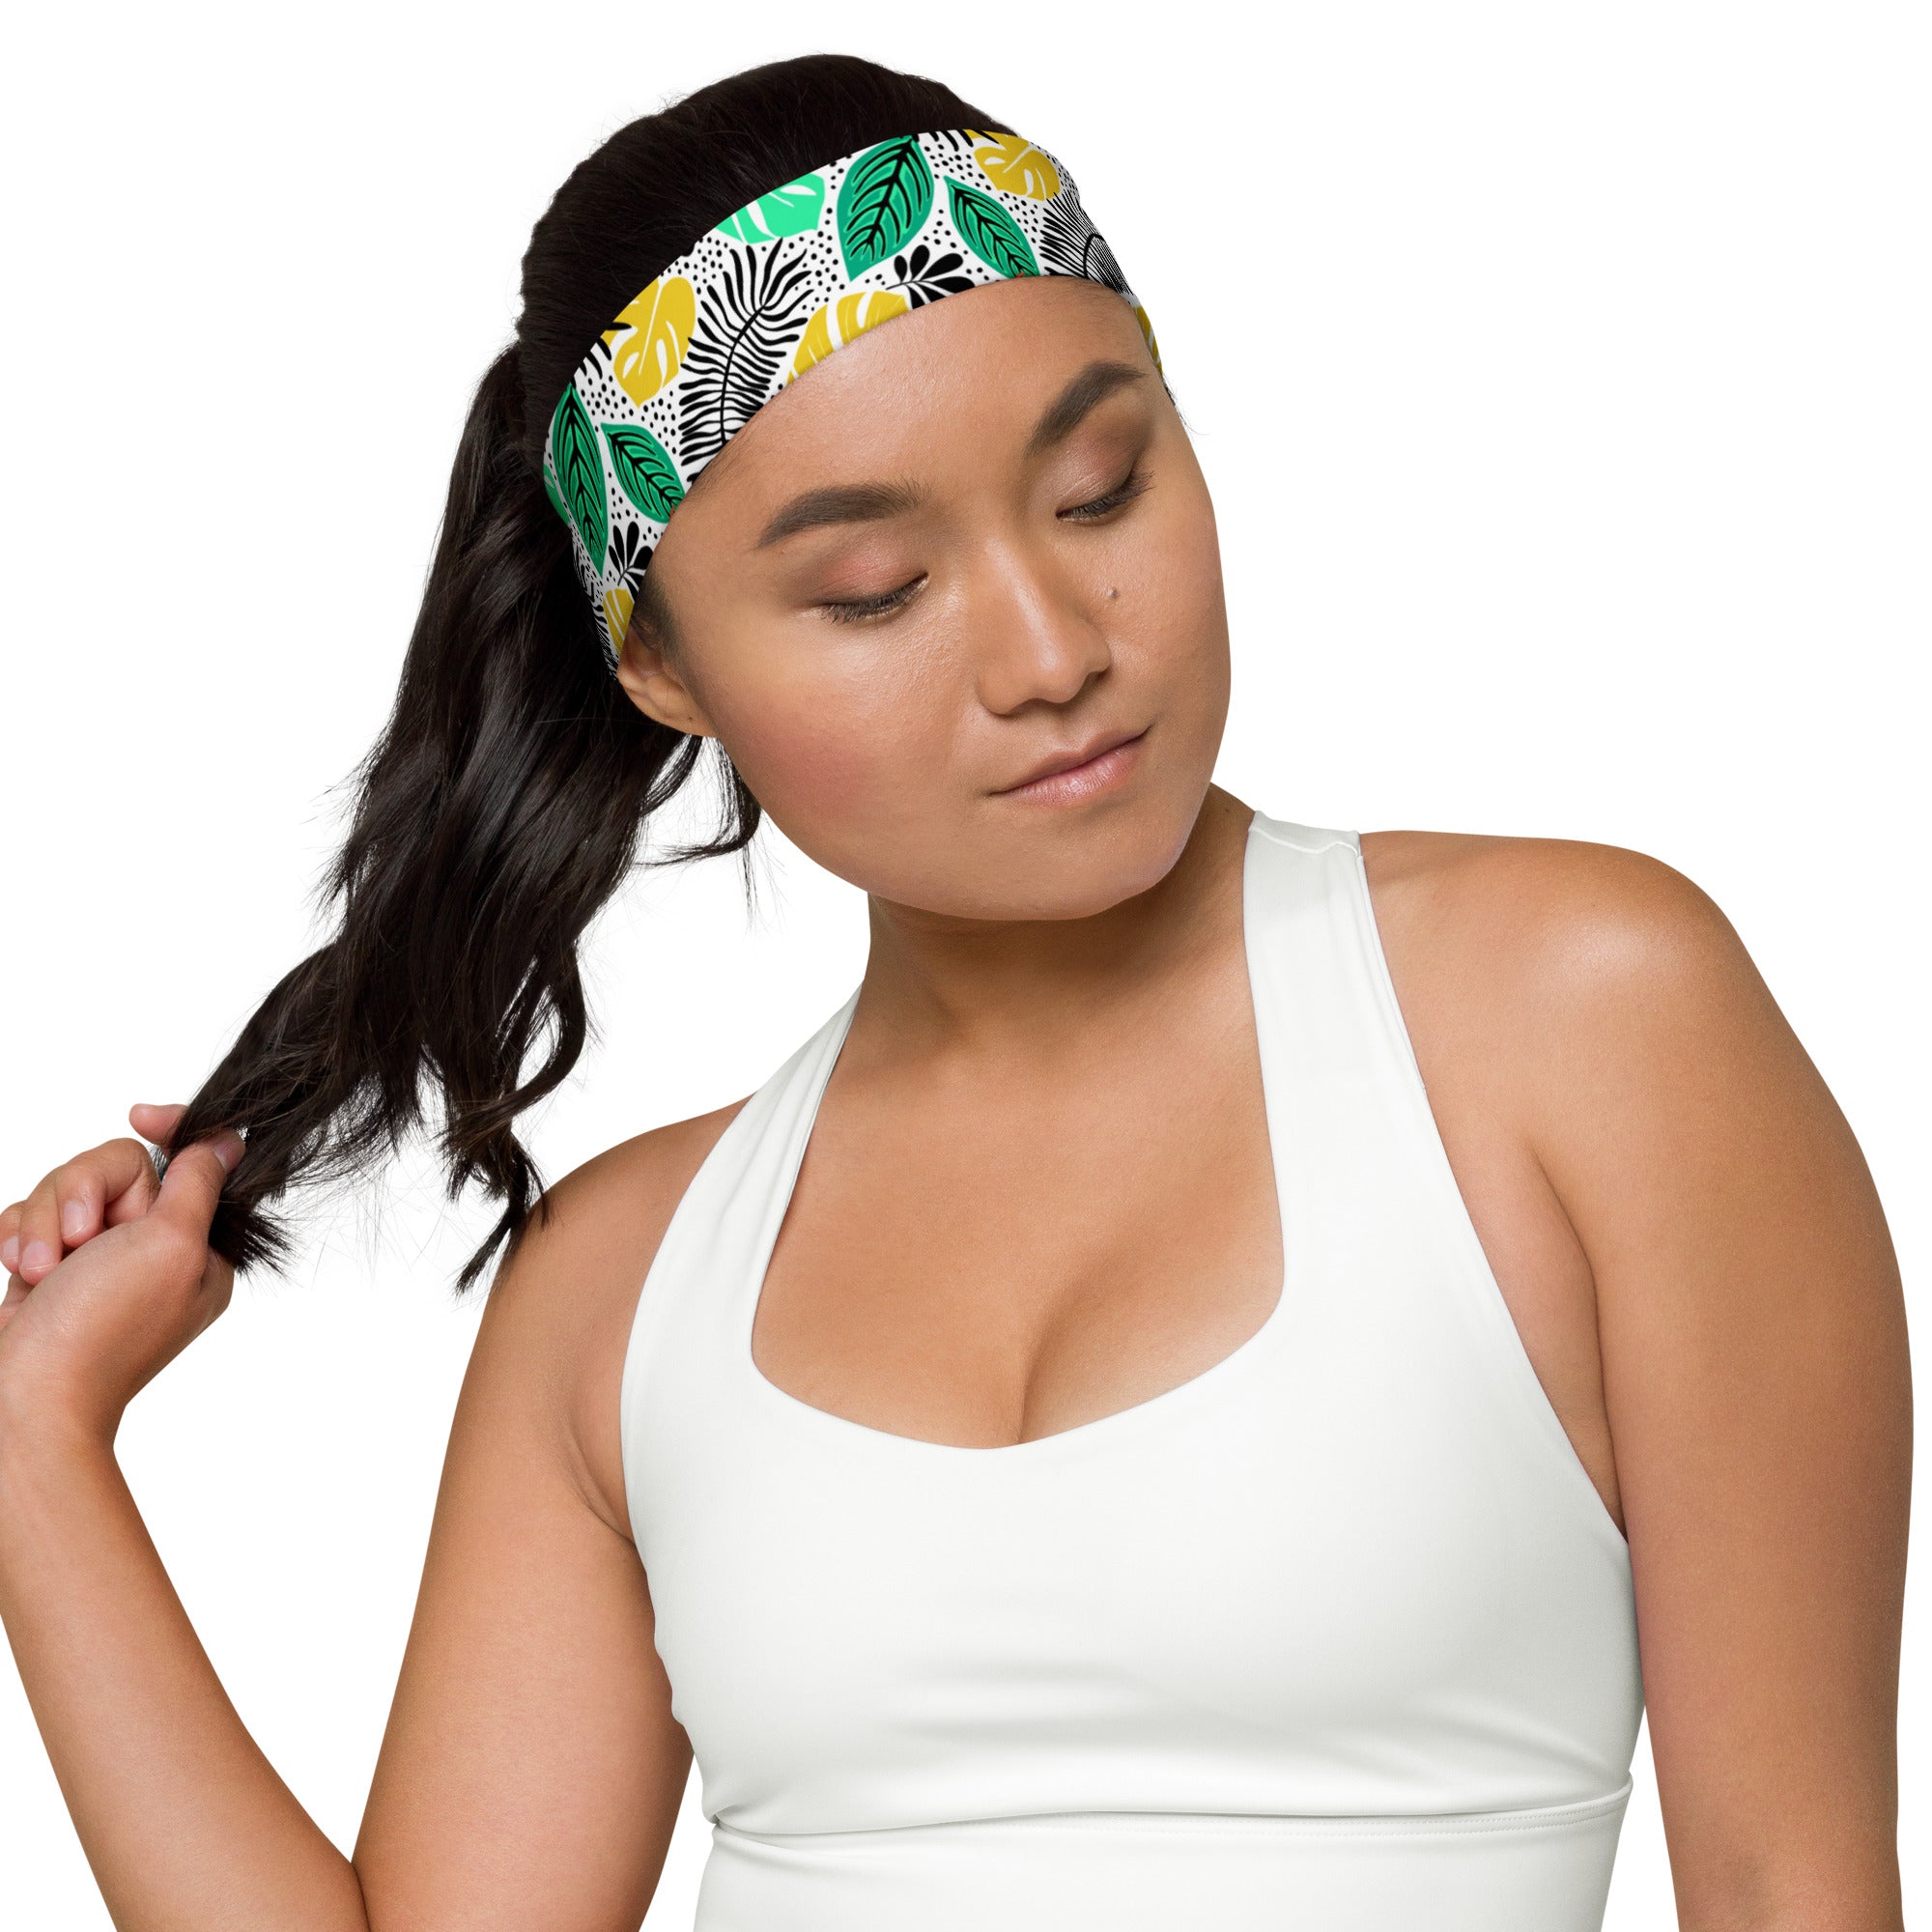 Women's Printed Headband - Tropical Print in Citrus